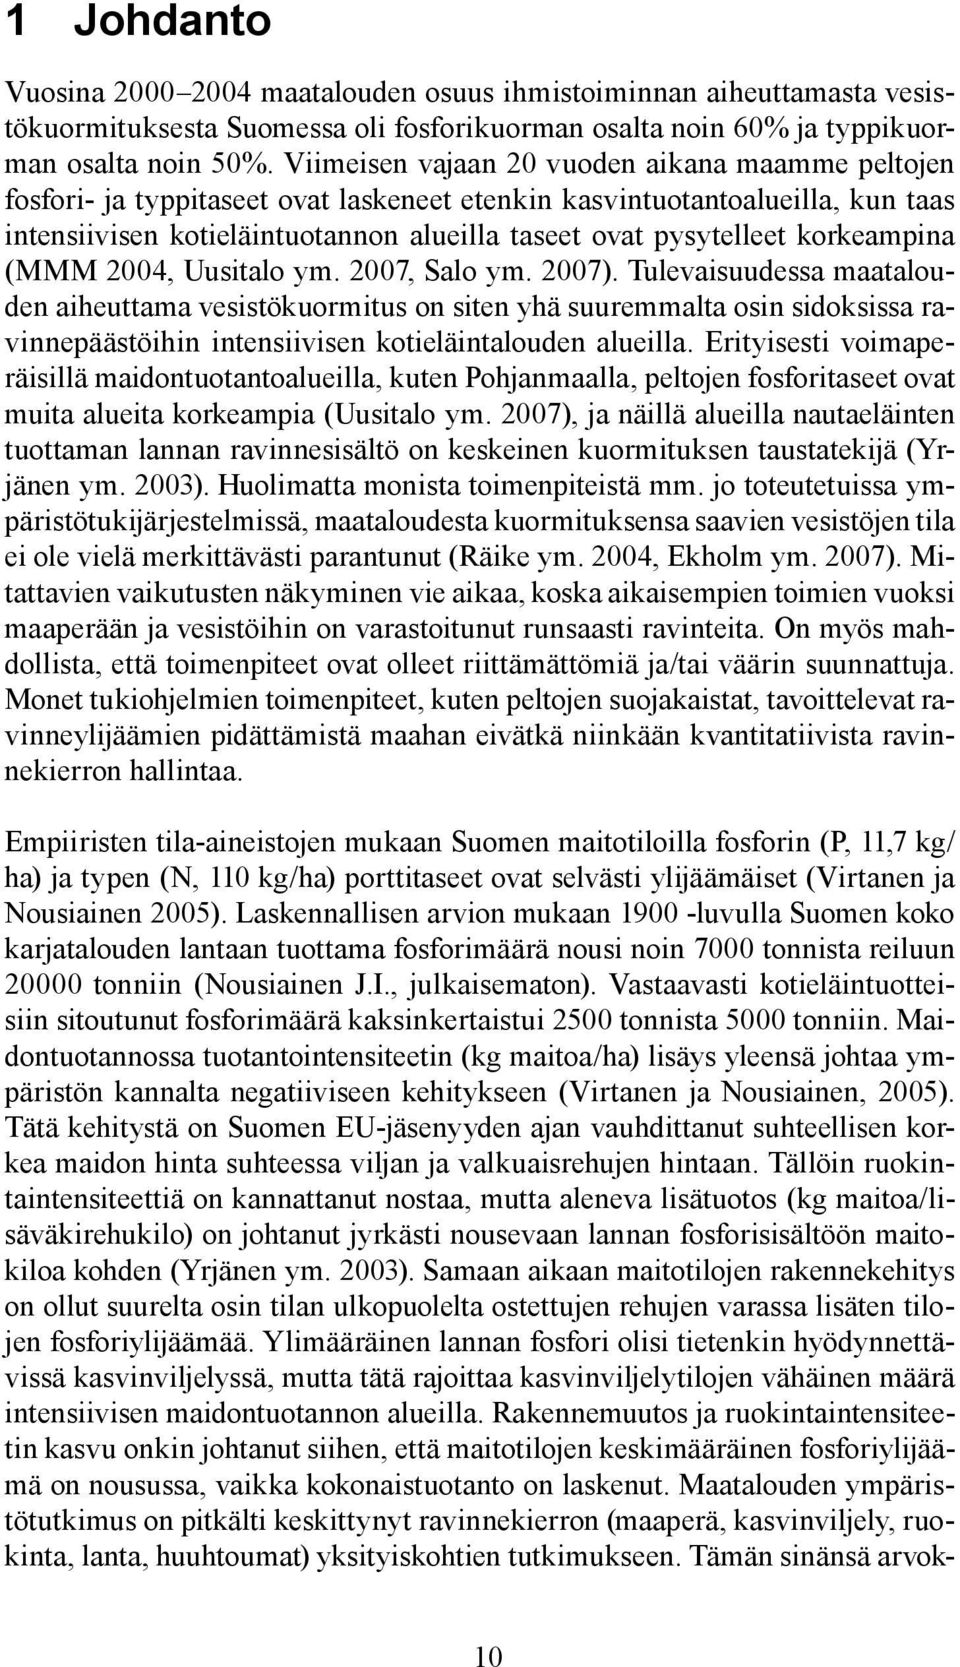 korkeampina (MMM 2004, Uusitalo ym. 2007, Salo ym. 2007).